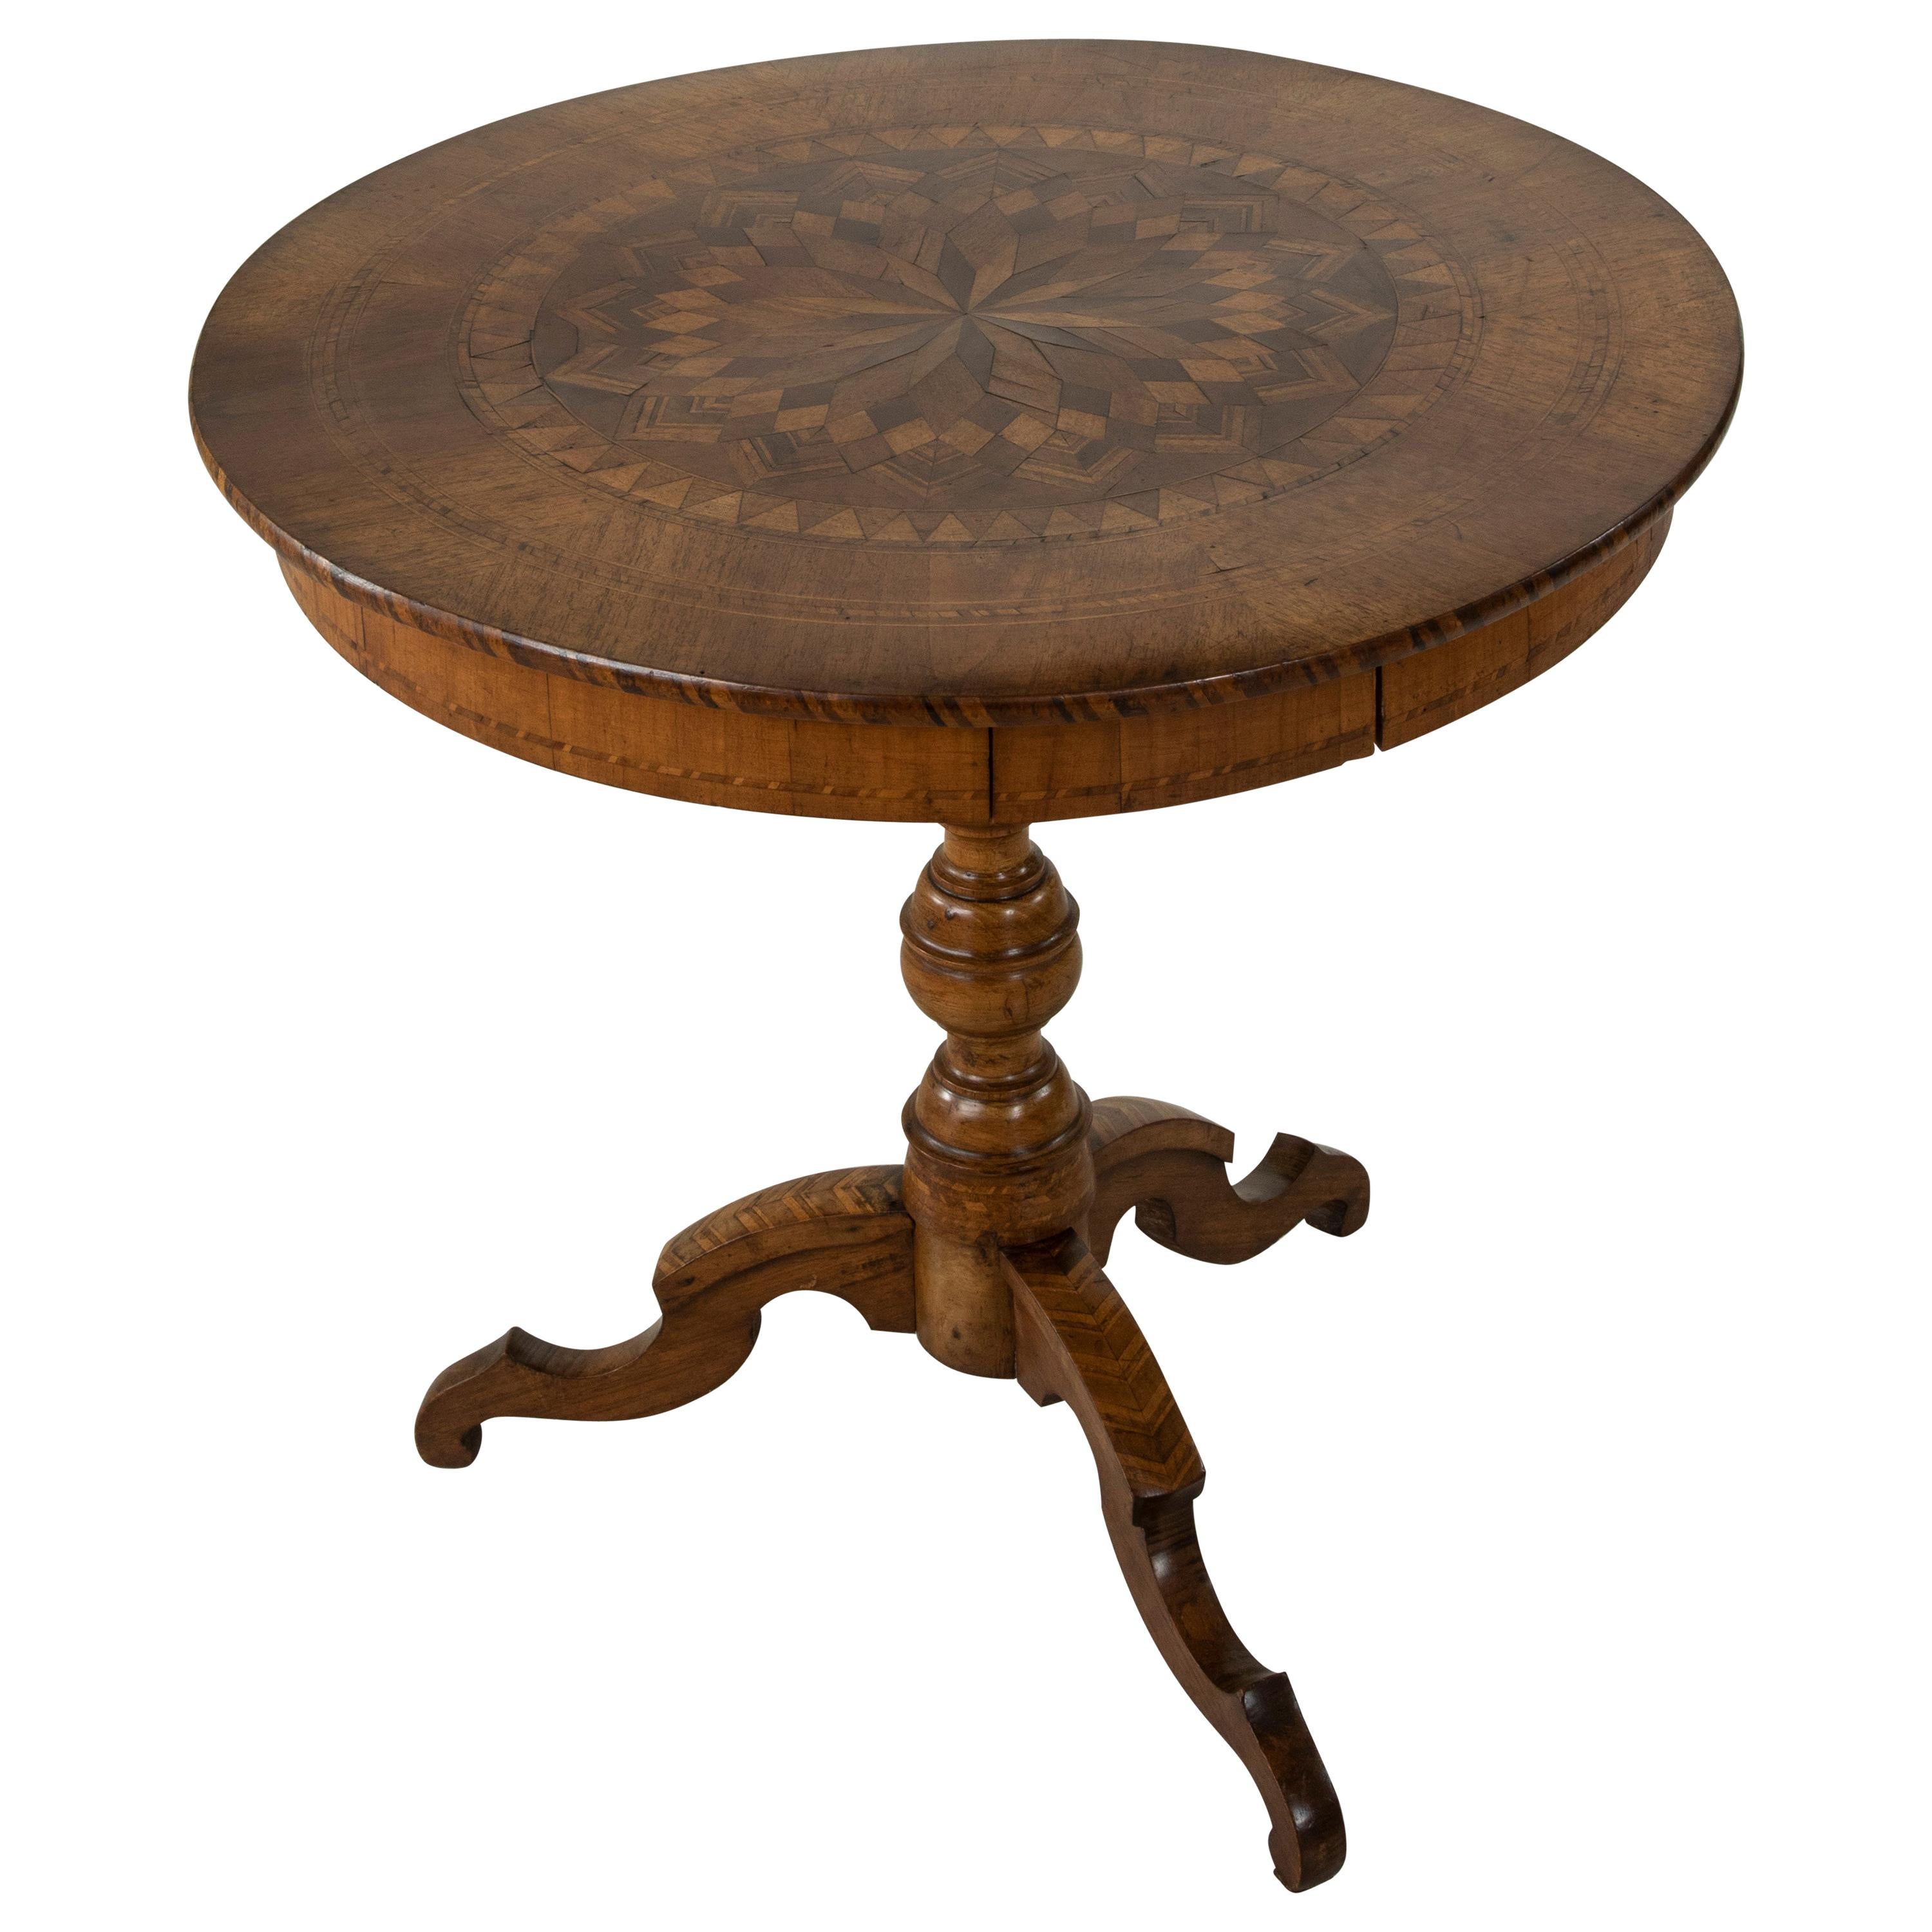 Late 19th Century Italian Marquetry Guéridon or Pedestal Table